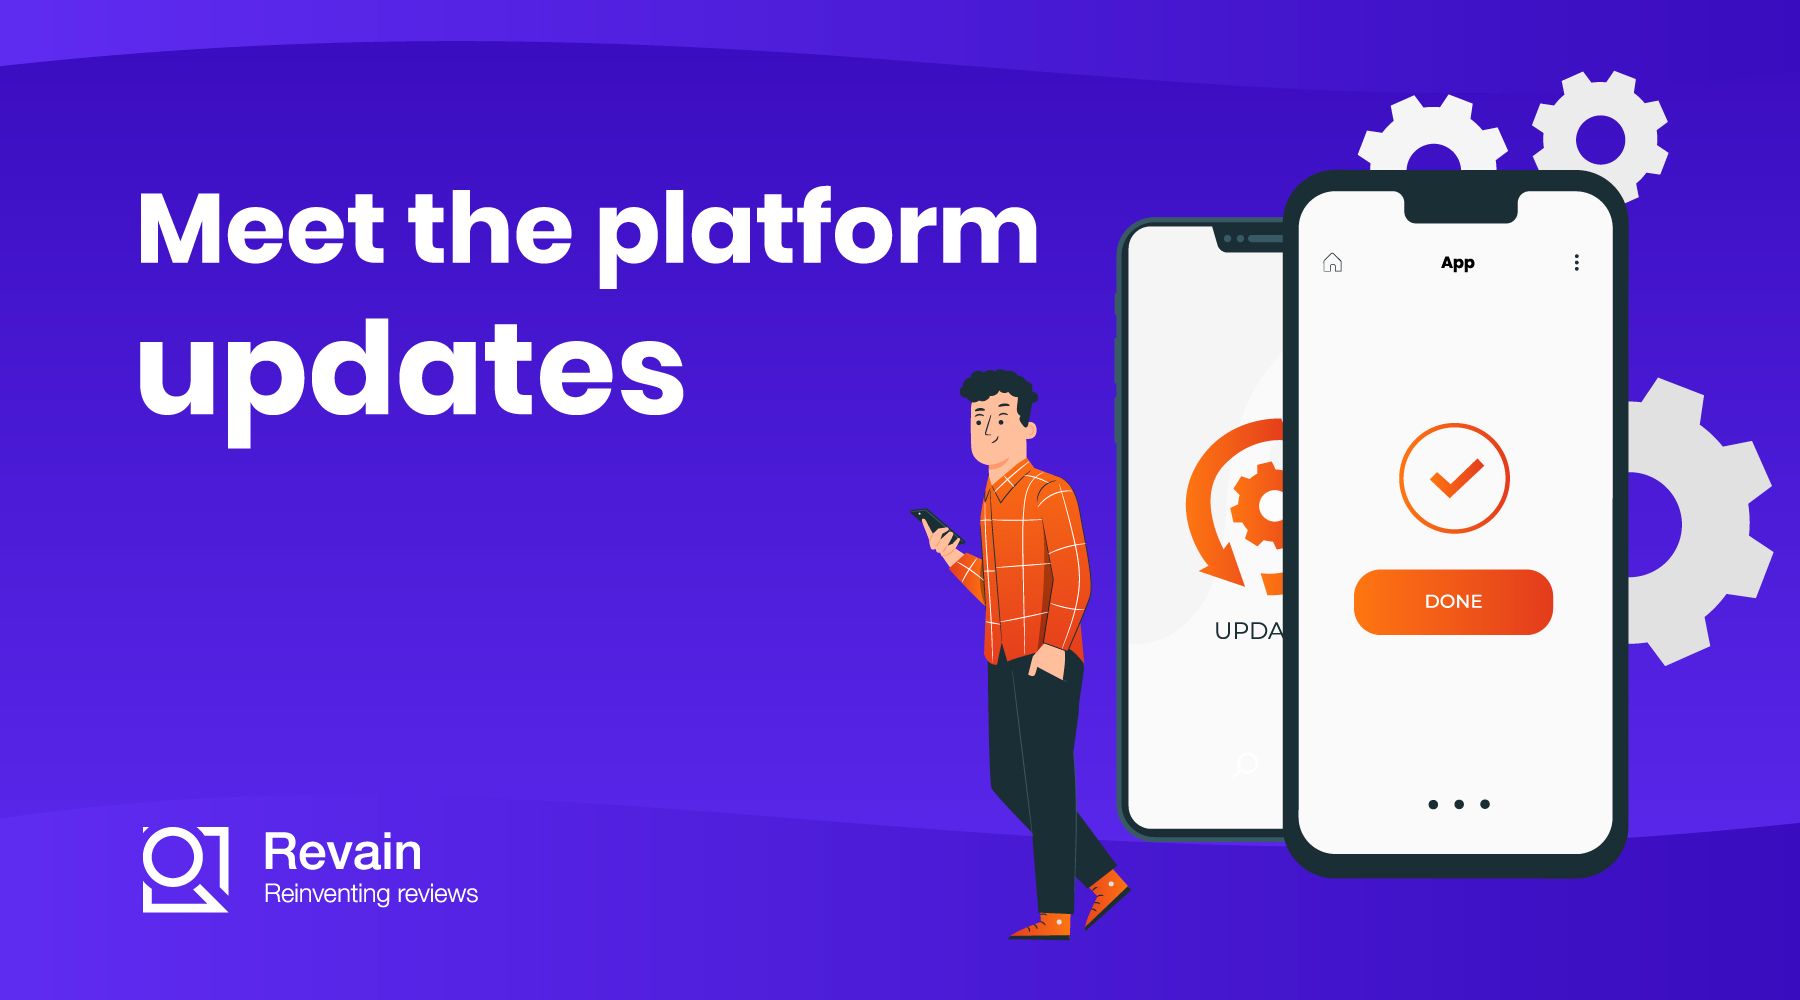 Article Revainers, meet the platform updates!